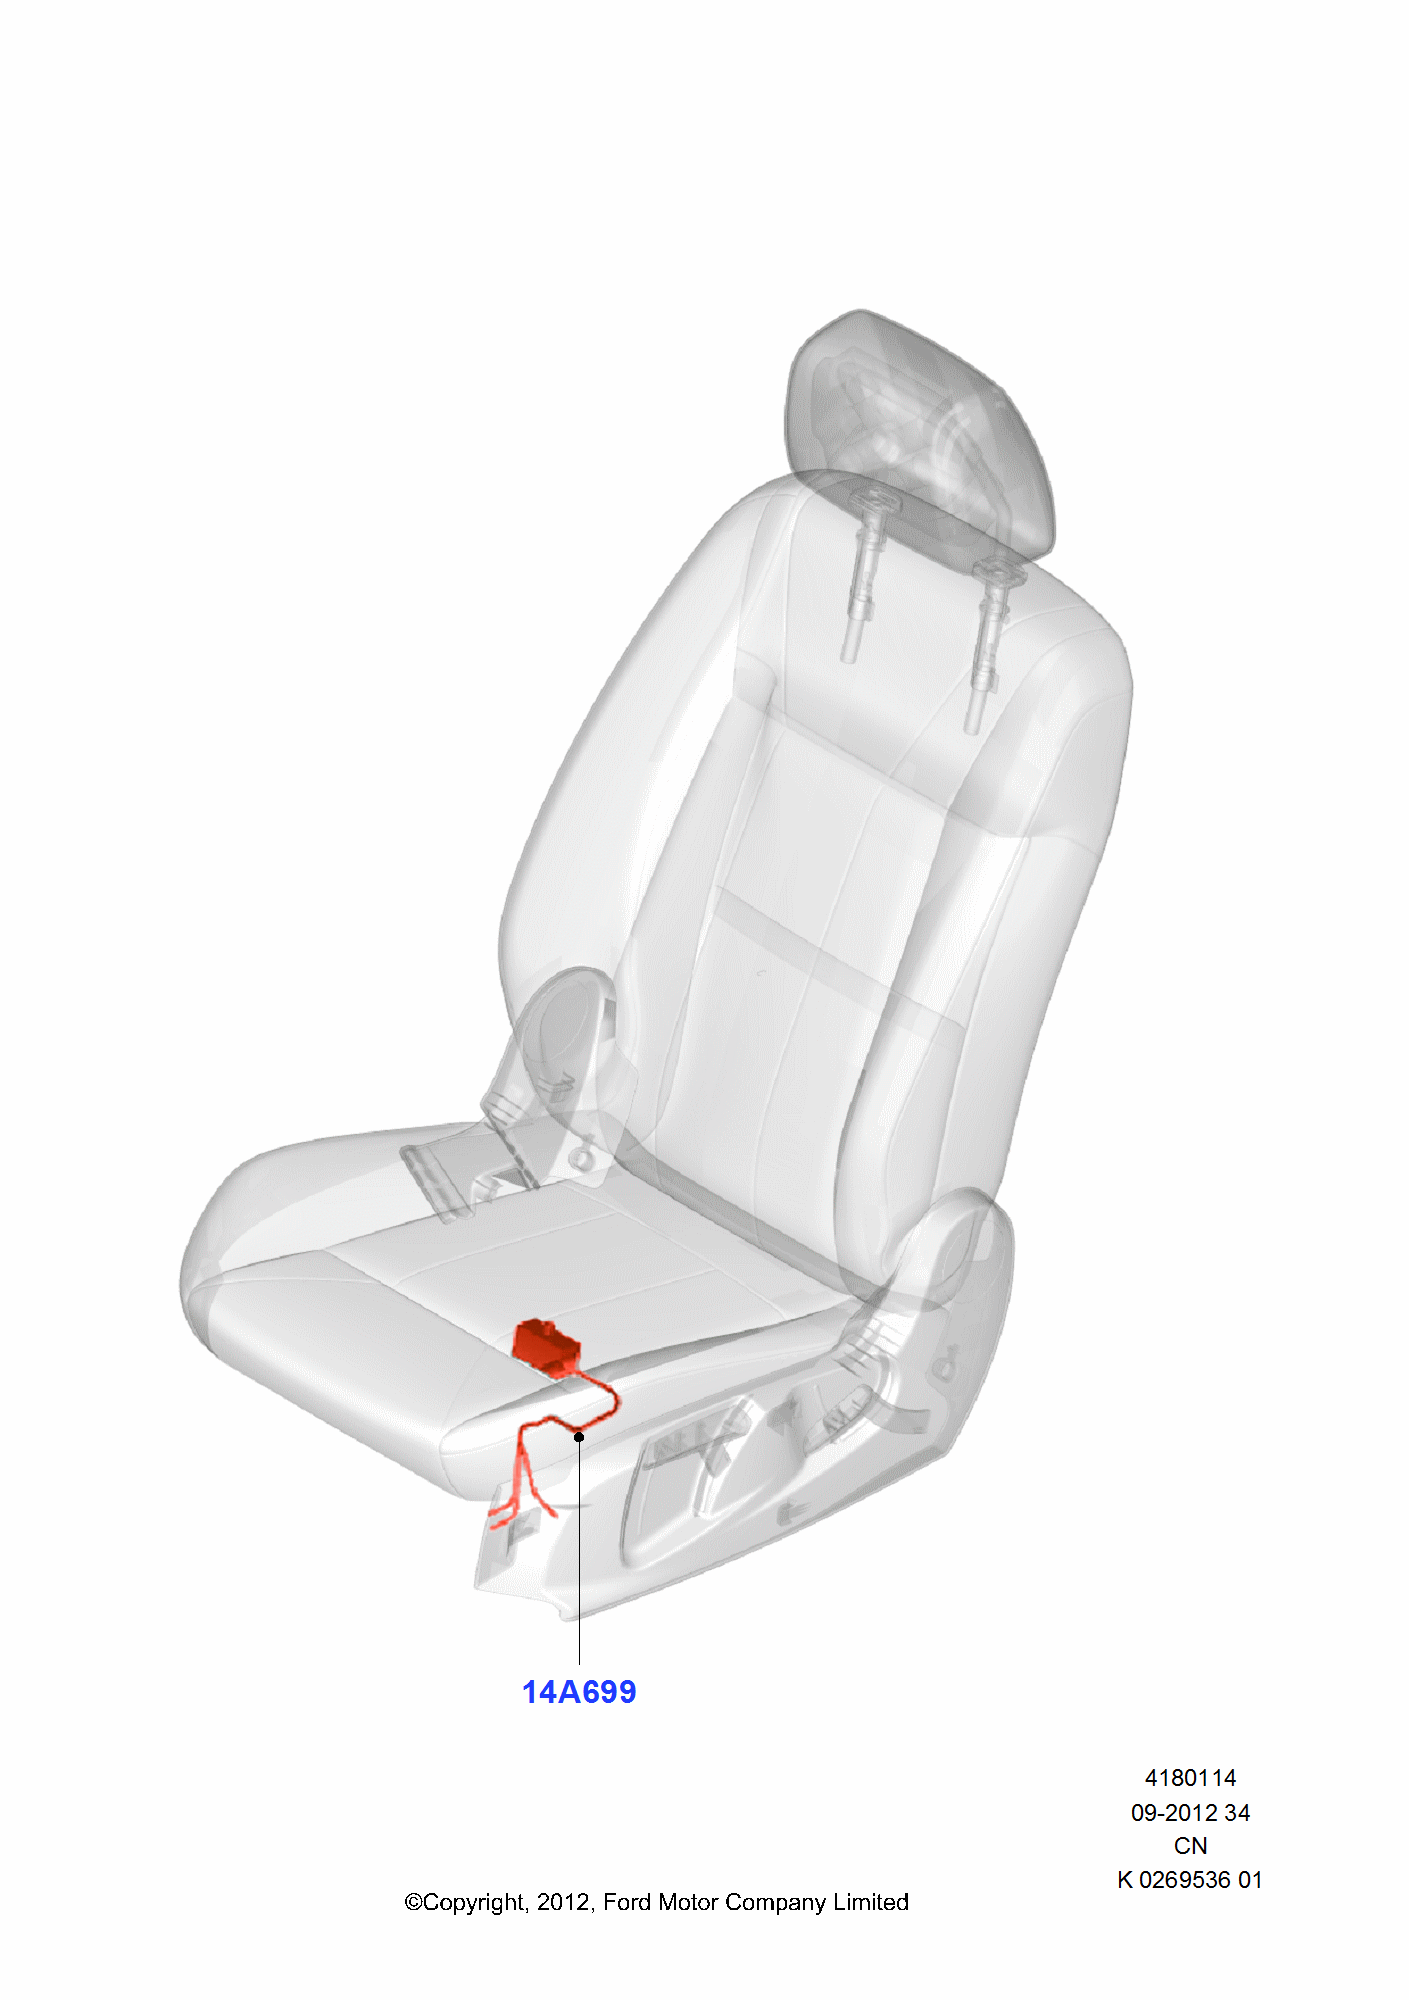 Wiring - Seats สำหรับ Ford Fiesta Fiesta 2012-                  (CCN)